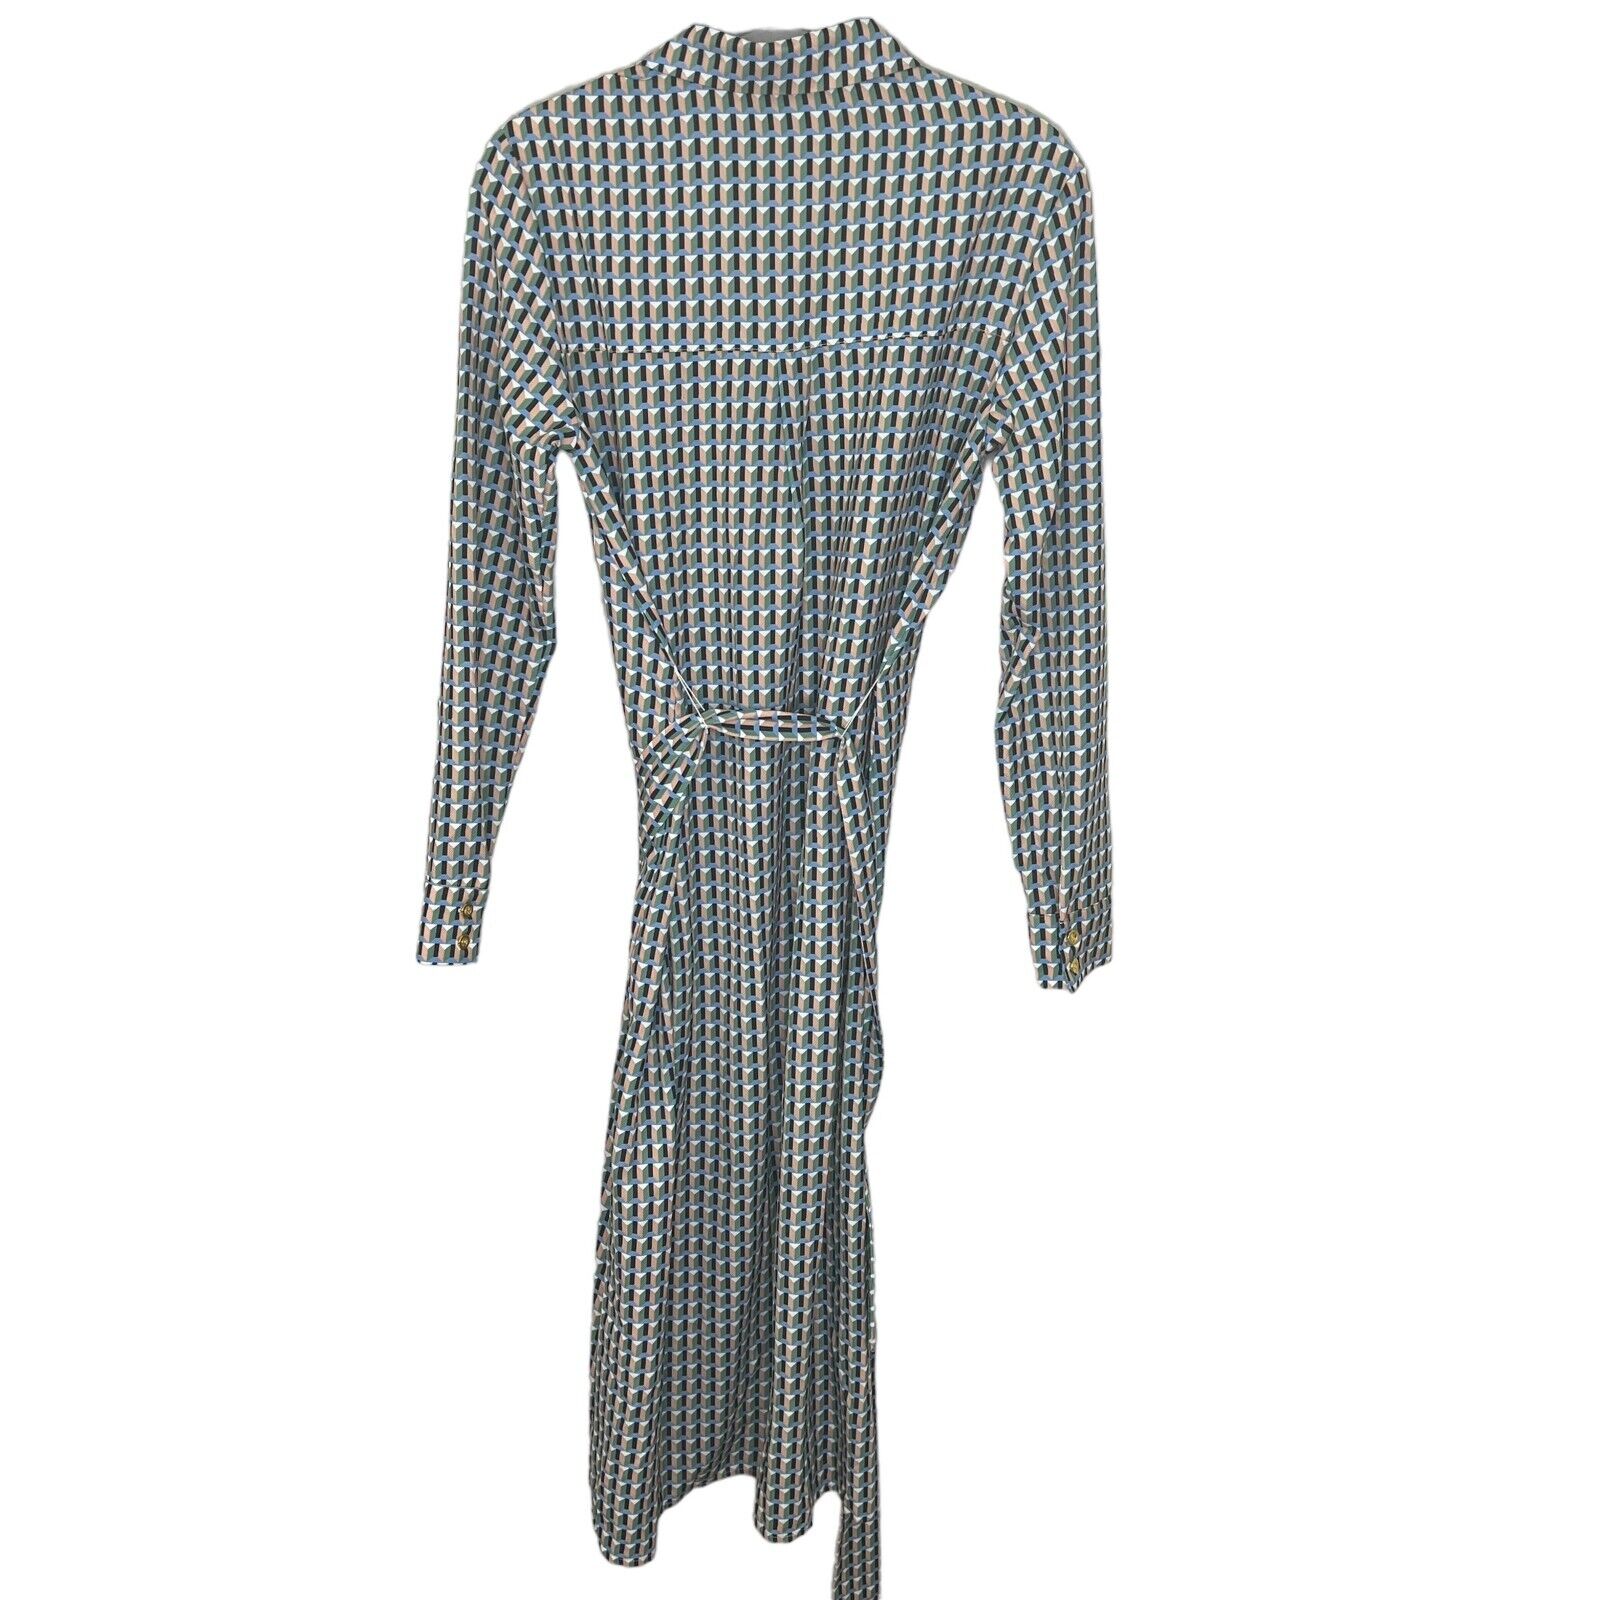 Alexia Admor Geometric Print Belted Shirt Dress Size XS NEW